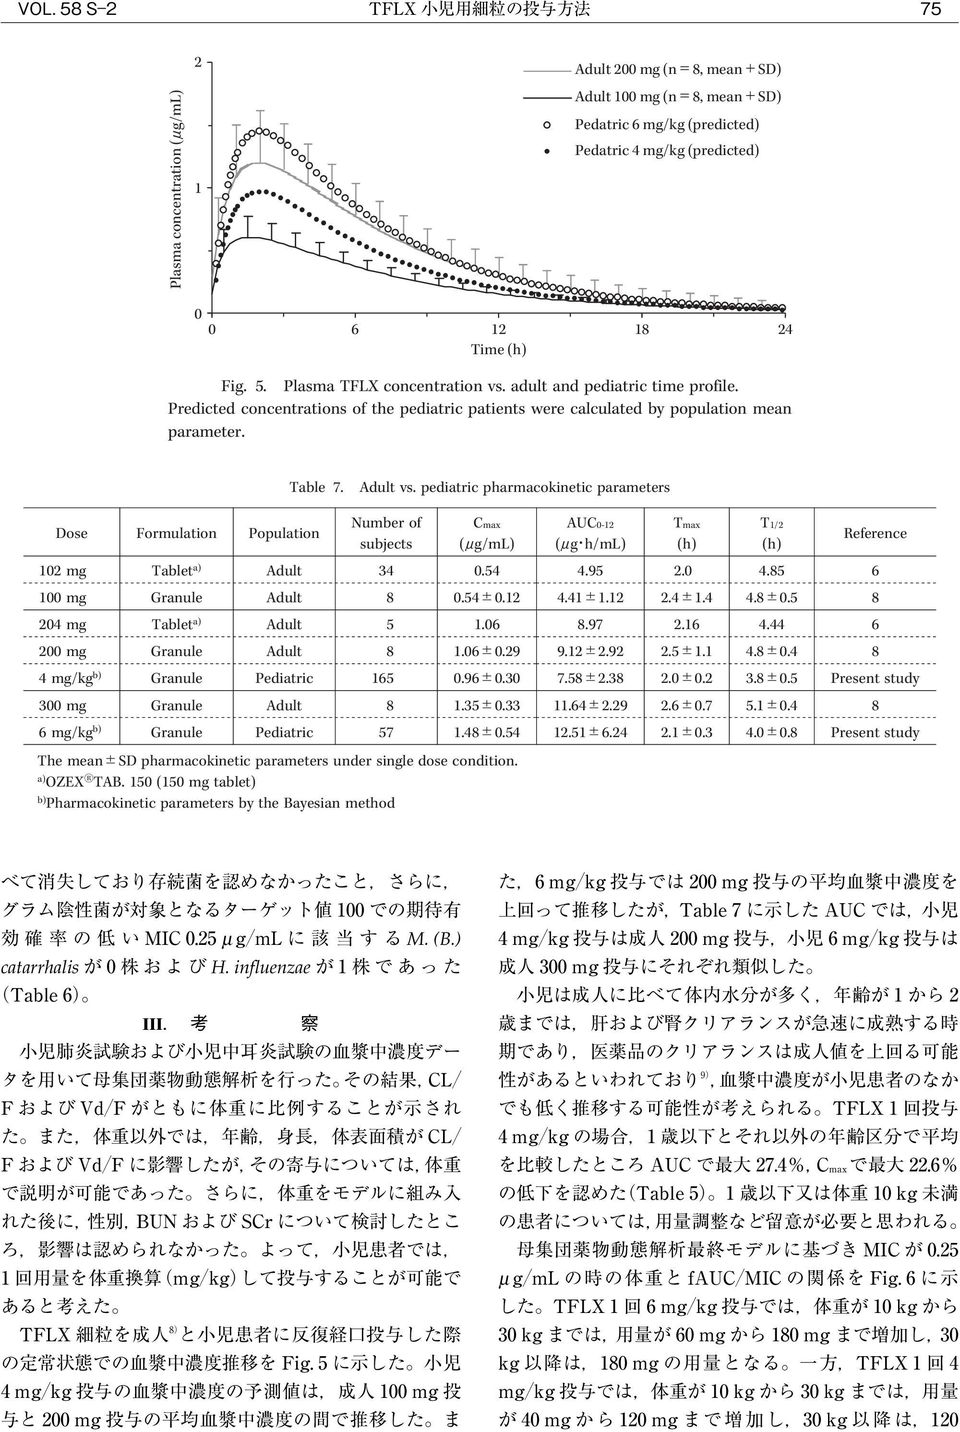 pediatricpharmacokineticparameters Adult Adult Adult Adult Numberof subjects 5 Cmax (μ g/ml).5.5±...±.9 AUC- (μ g h/ml).95.±..97 9.±.9 Tmax (h)..±...5±. T/ (h).5.±.5..±. Reference mg/kg b) Granule Pediatric 5.